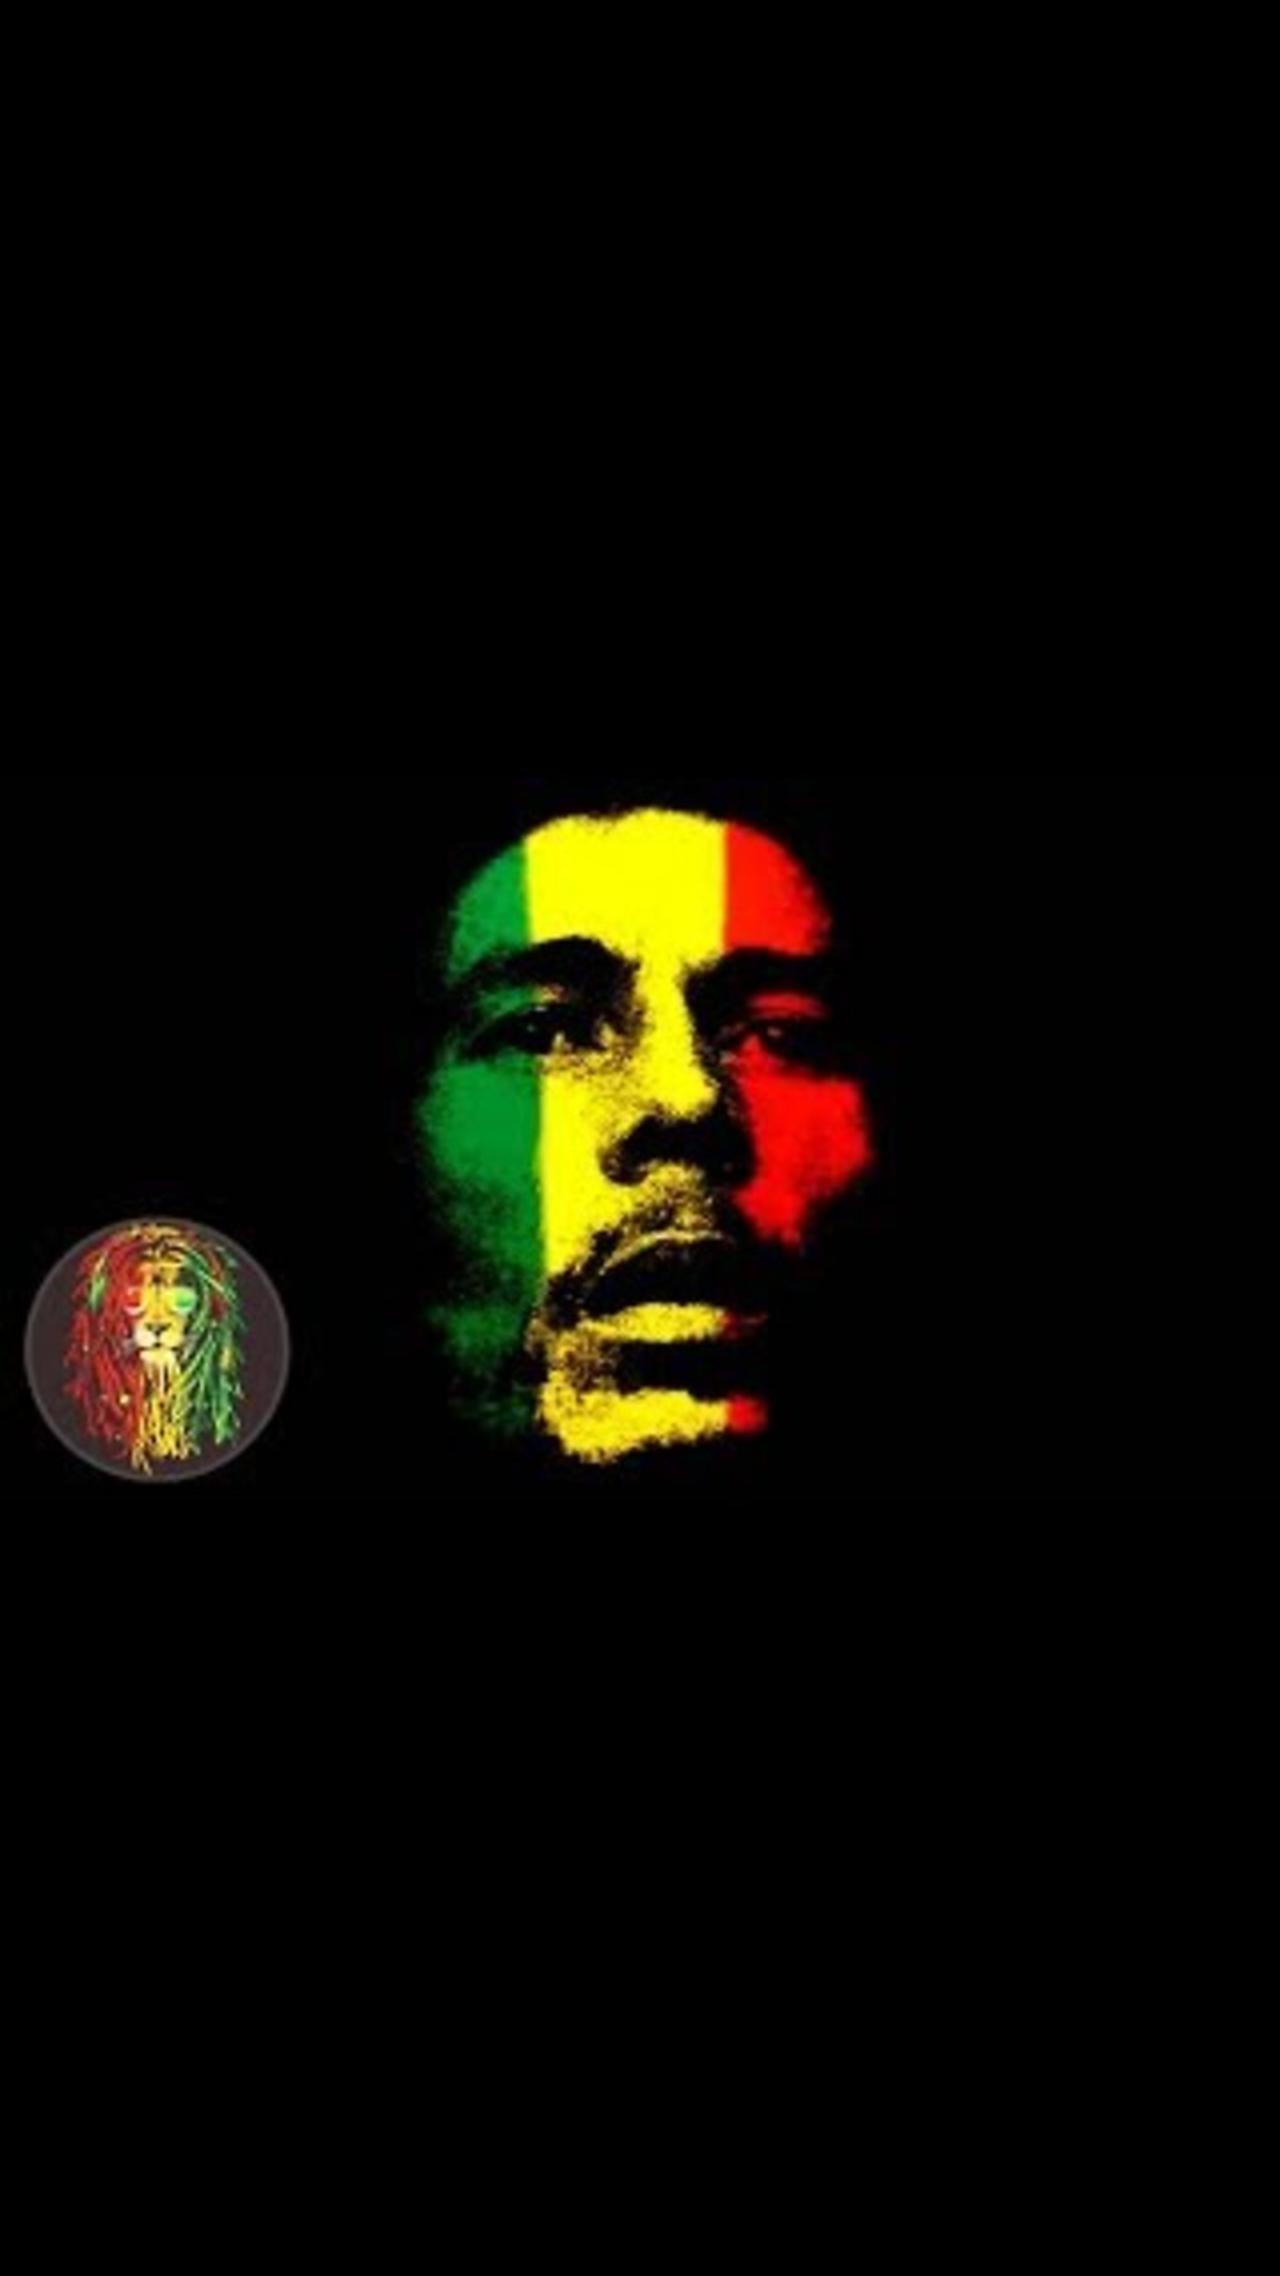 Bob Marley - Three Little Birds (Everything's Gonna Be Alright)